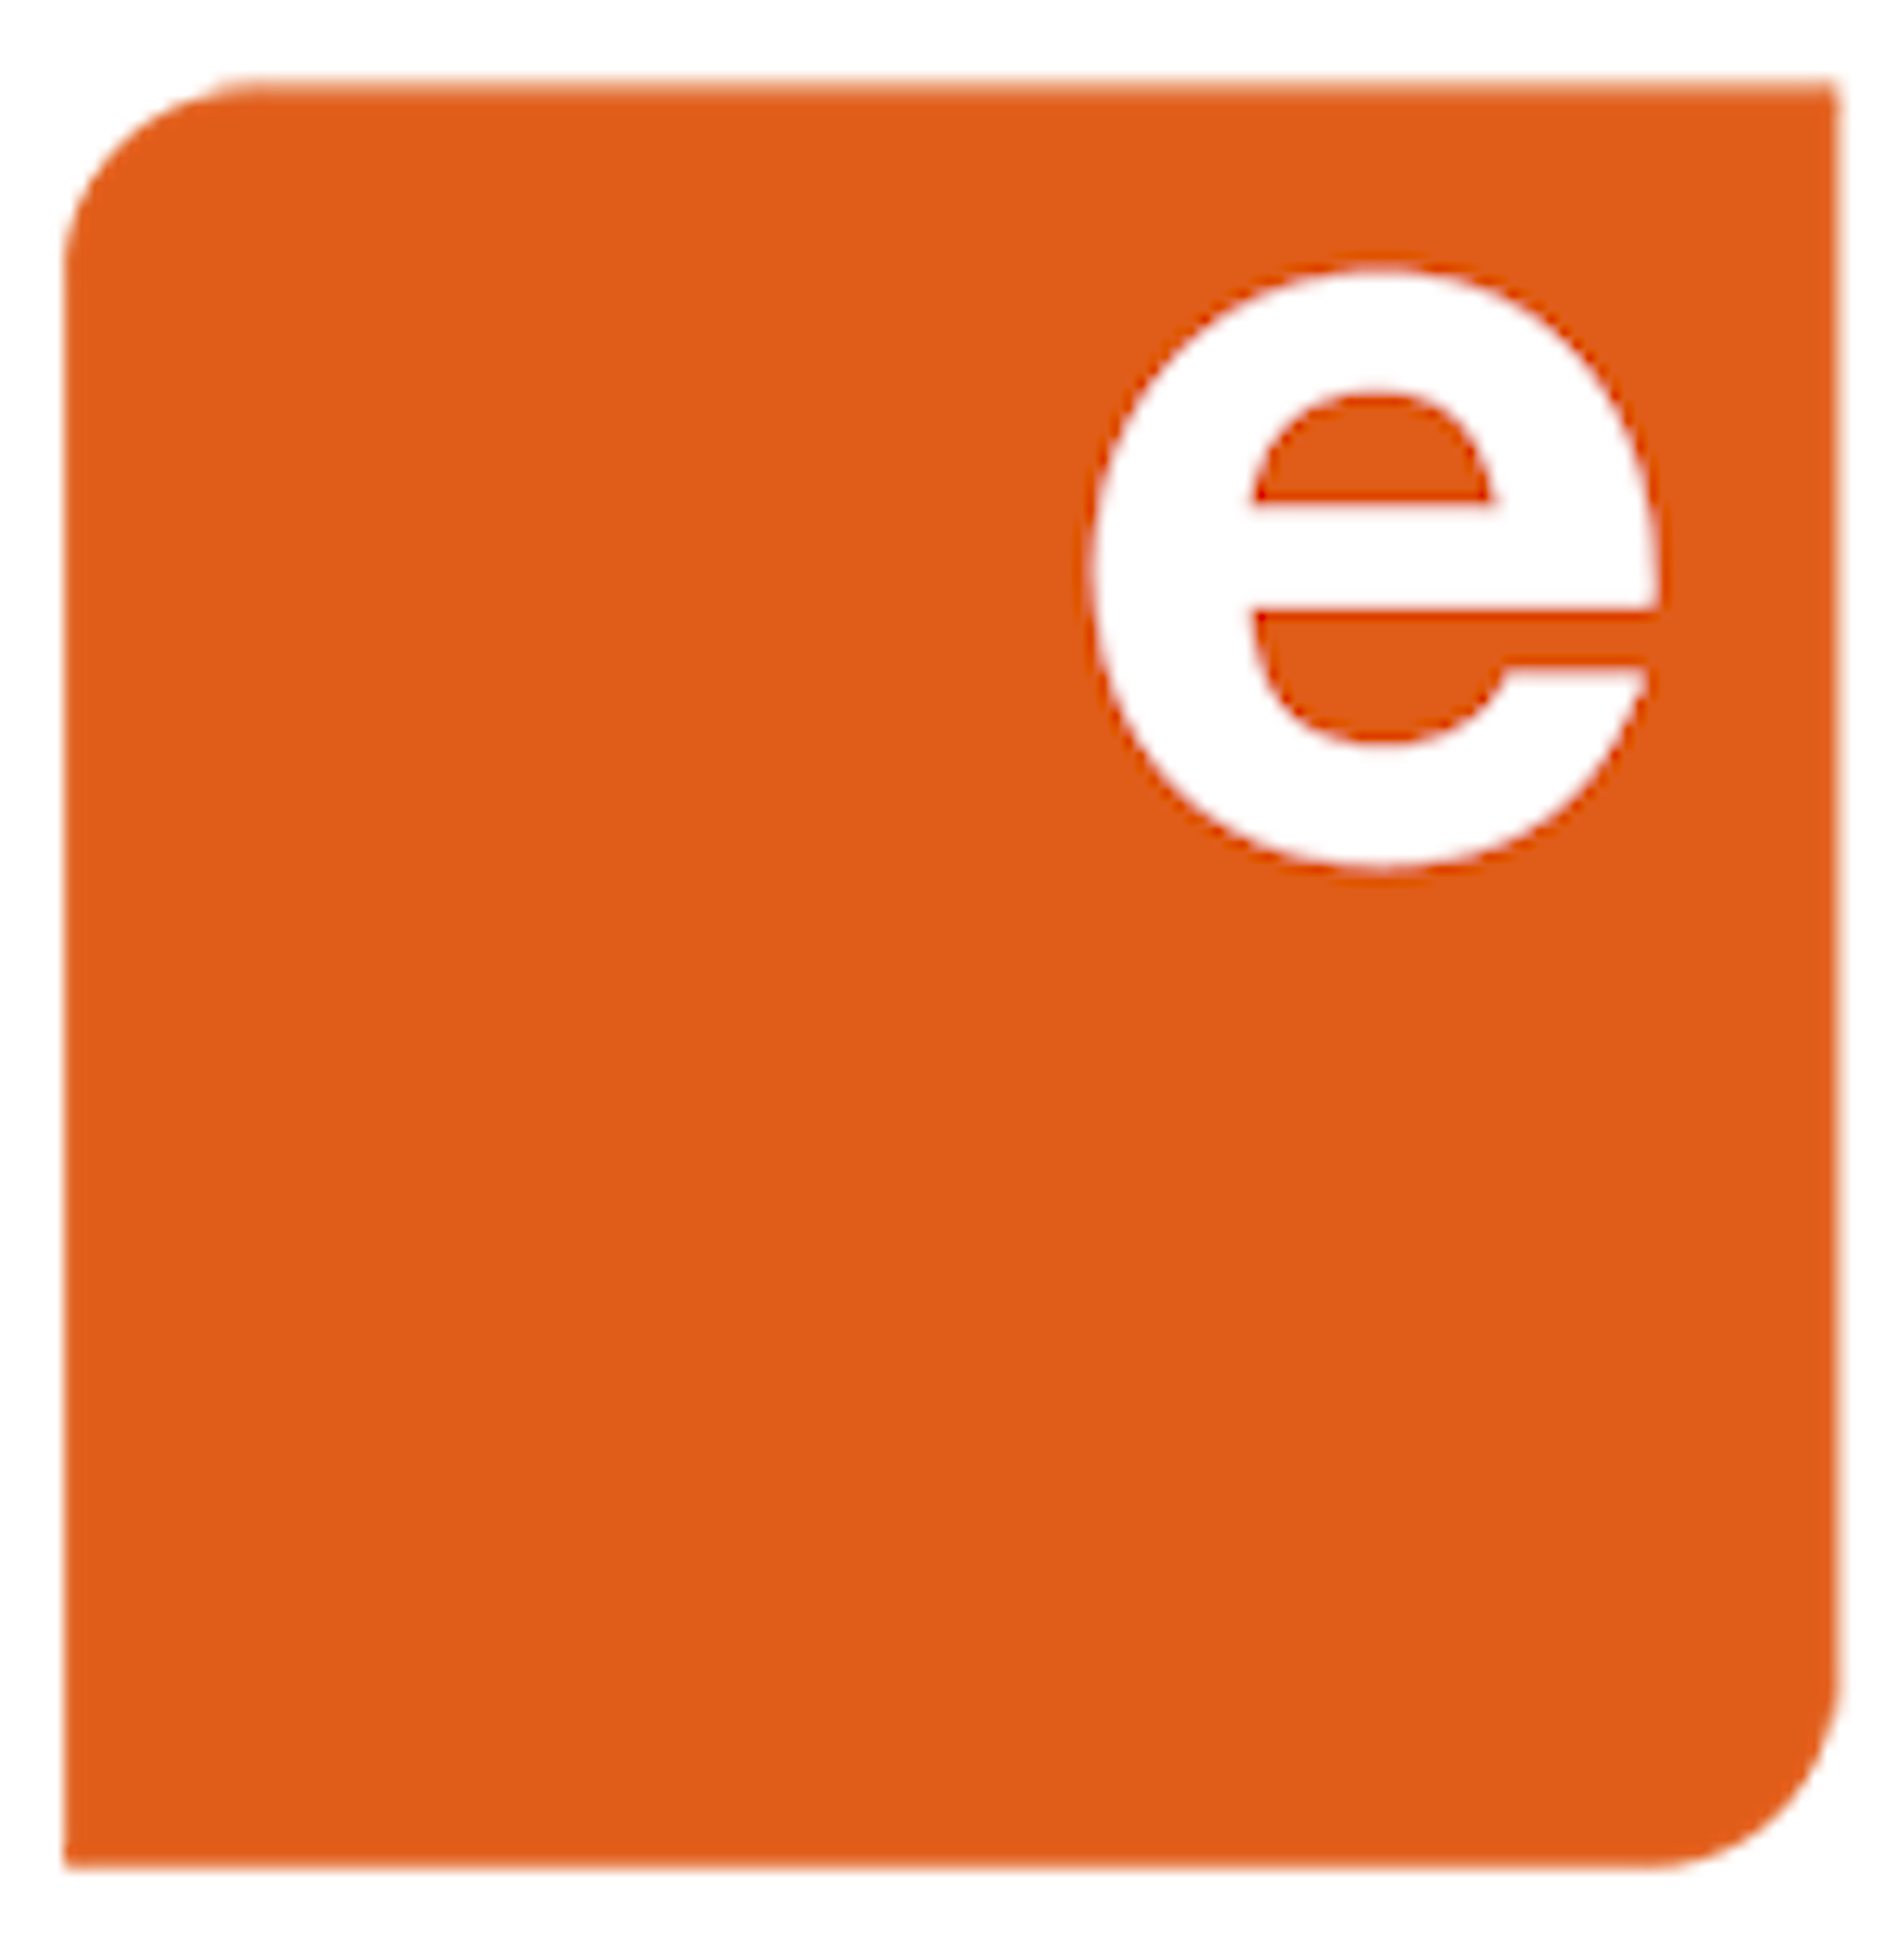 Exponent Case Management Logo